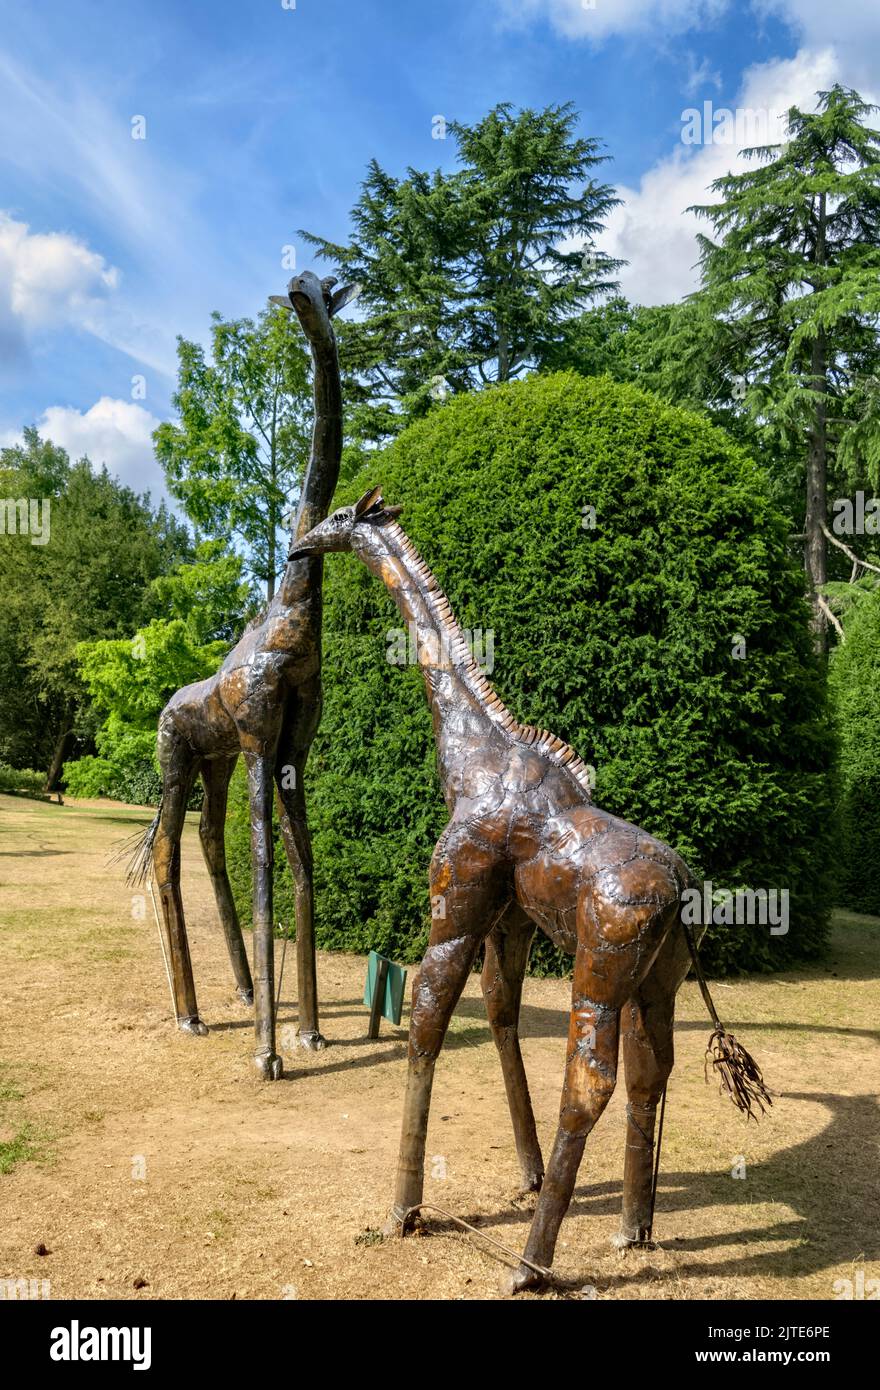 Metal Giraffe Sculptures Knebworth House and Gardens Banque D'Images